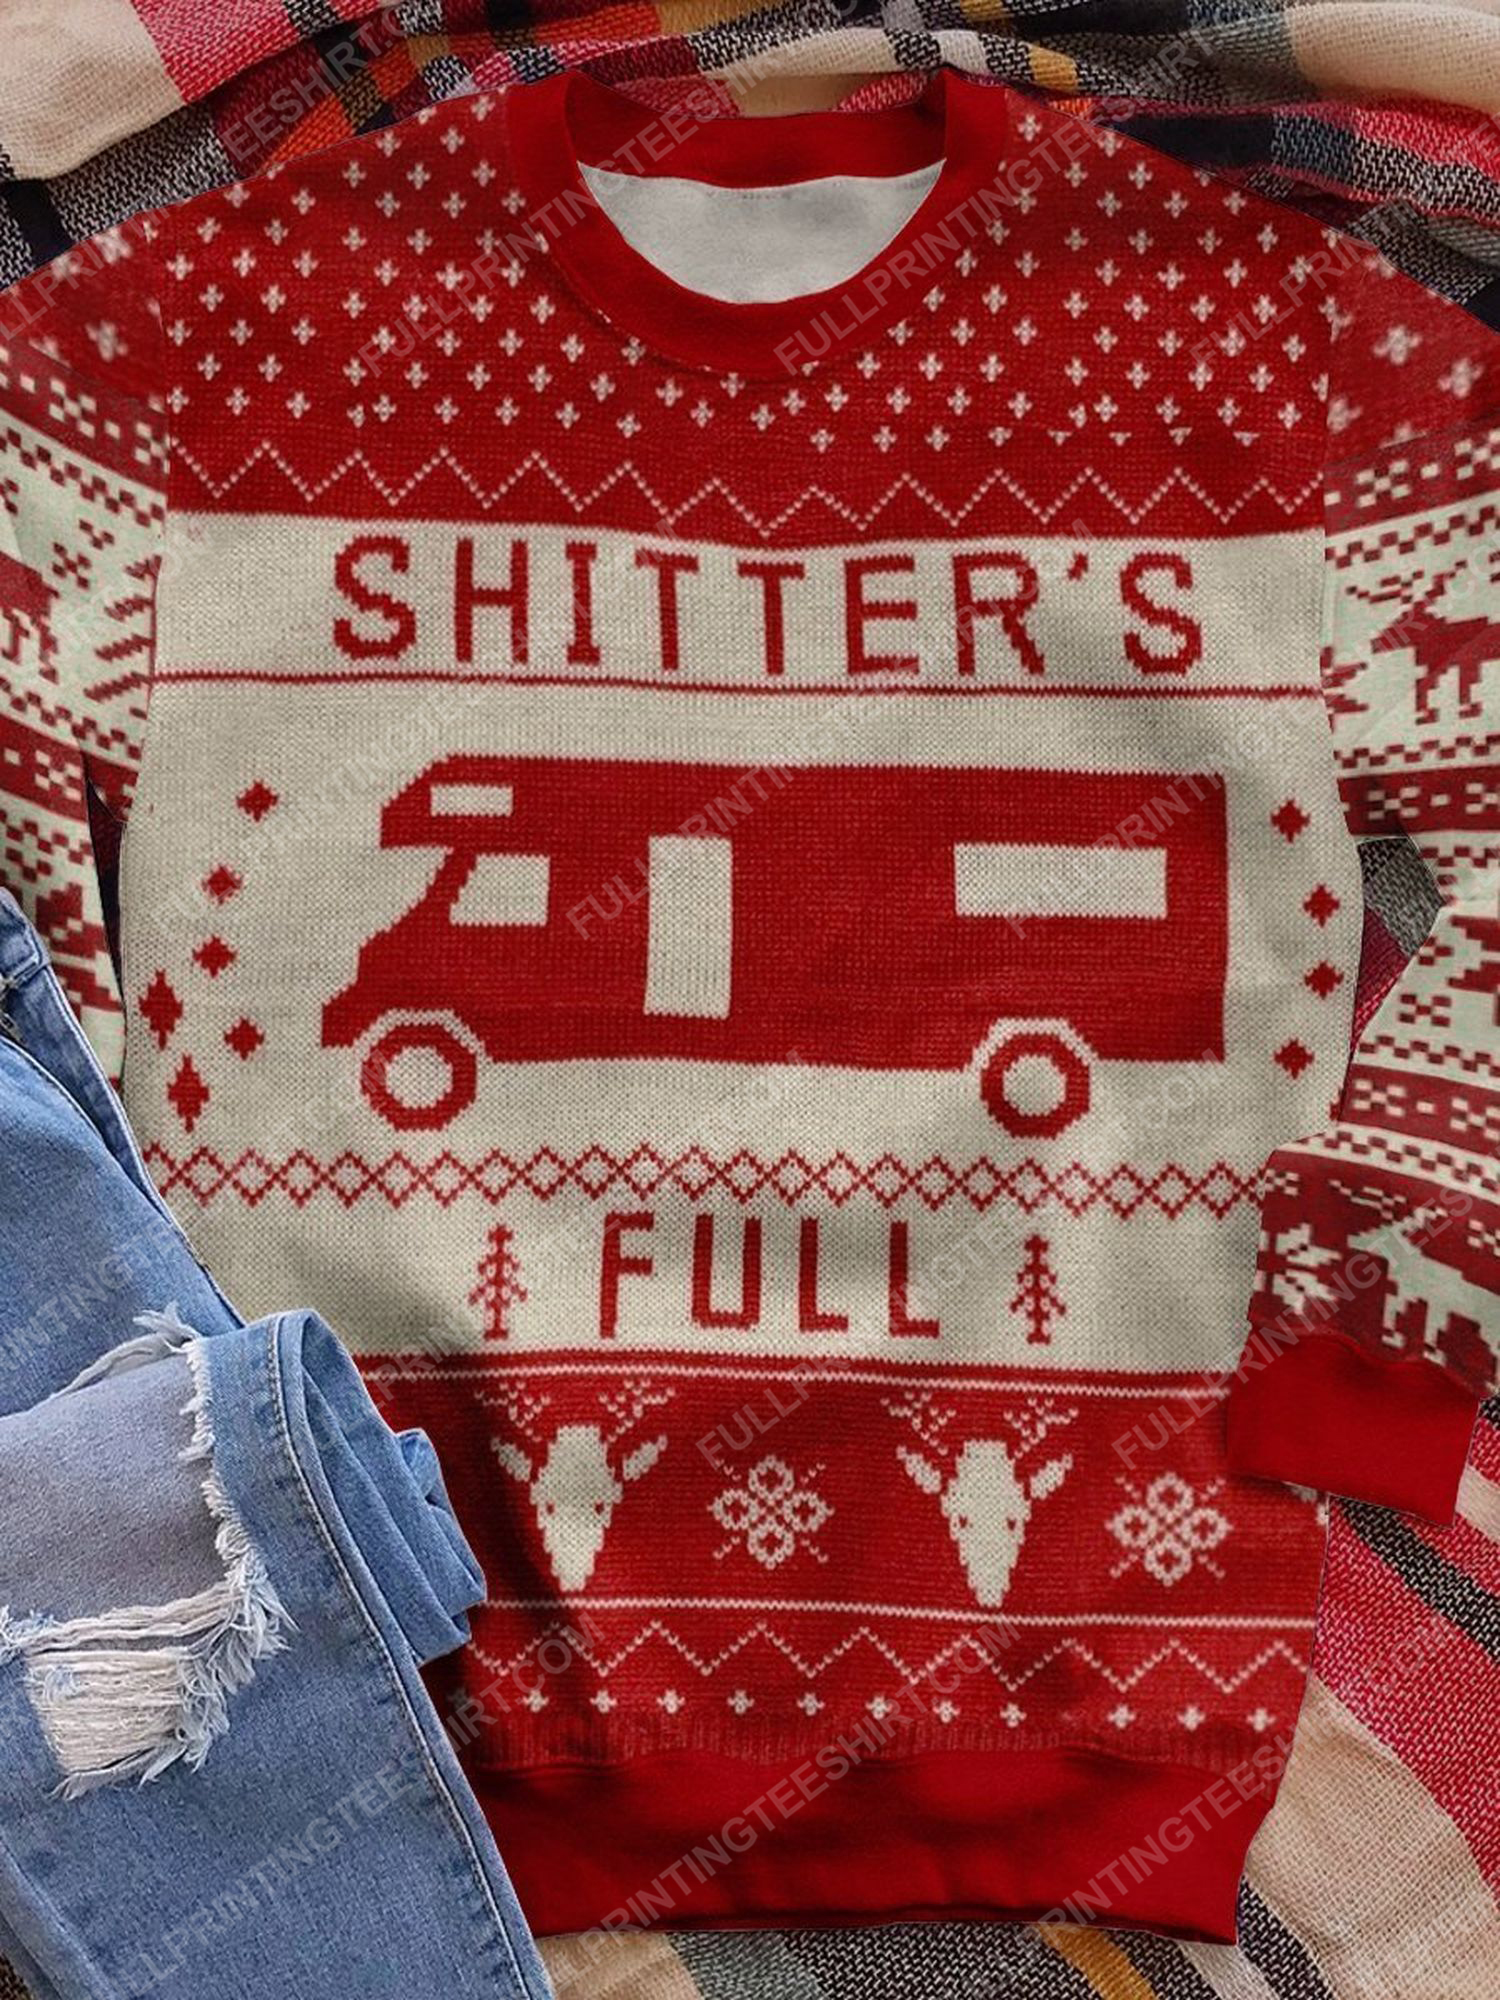 Christmas vacation shitter's full full print shirt 2